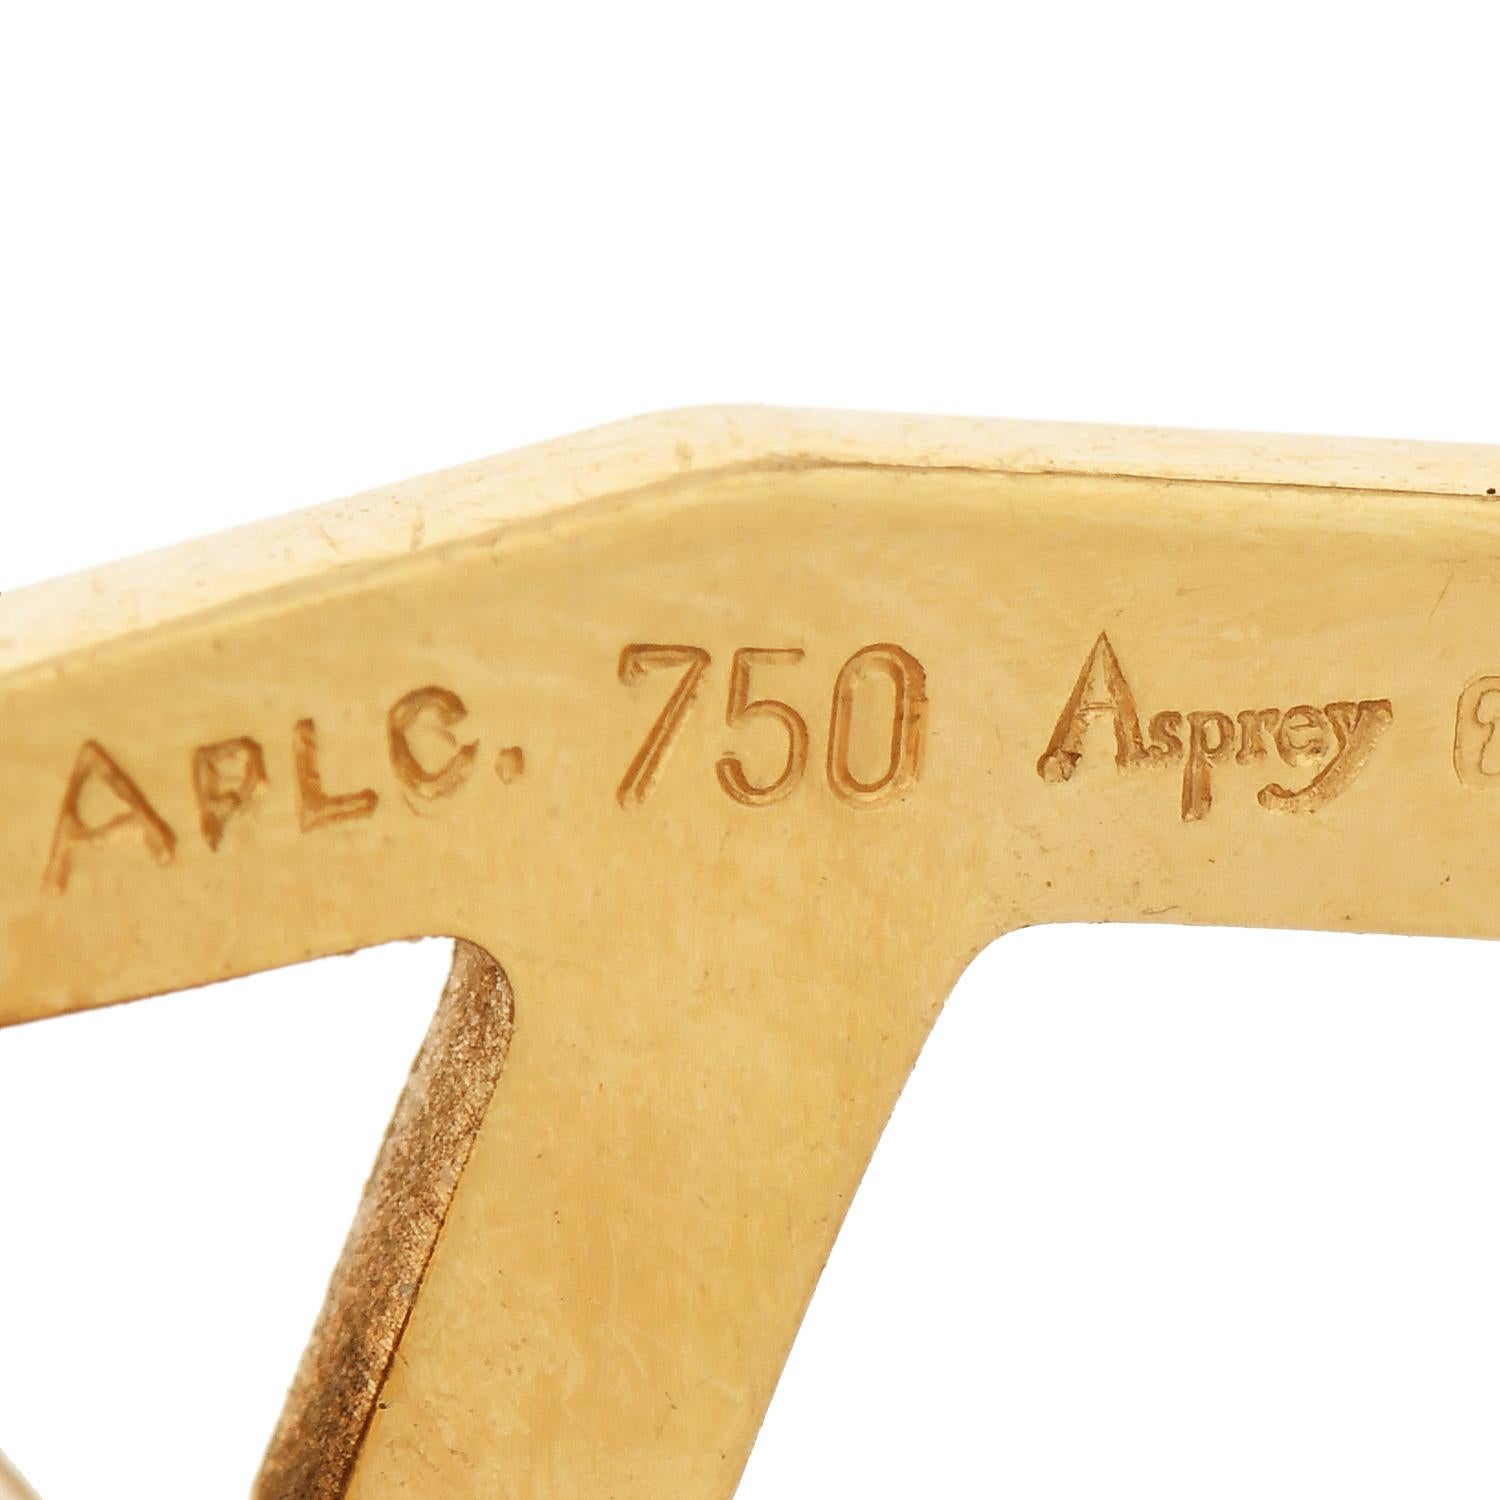 Oval Cut Asprey Vintage Cabochon Sapphire 18K Gold Oval Cuff Links For Sale